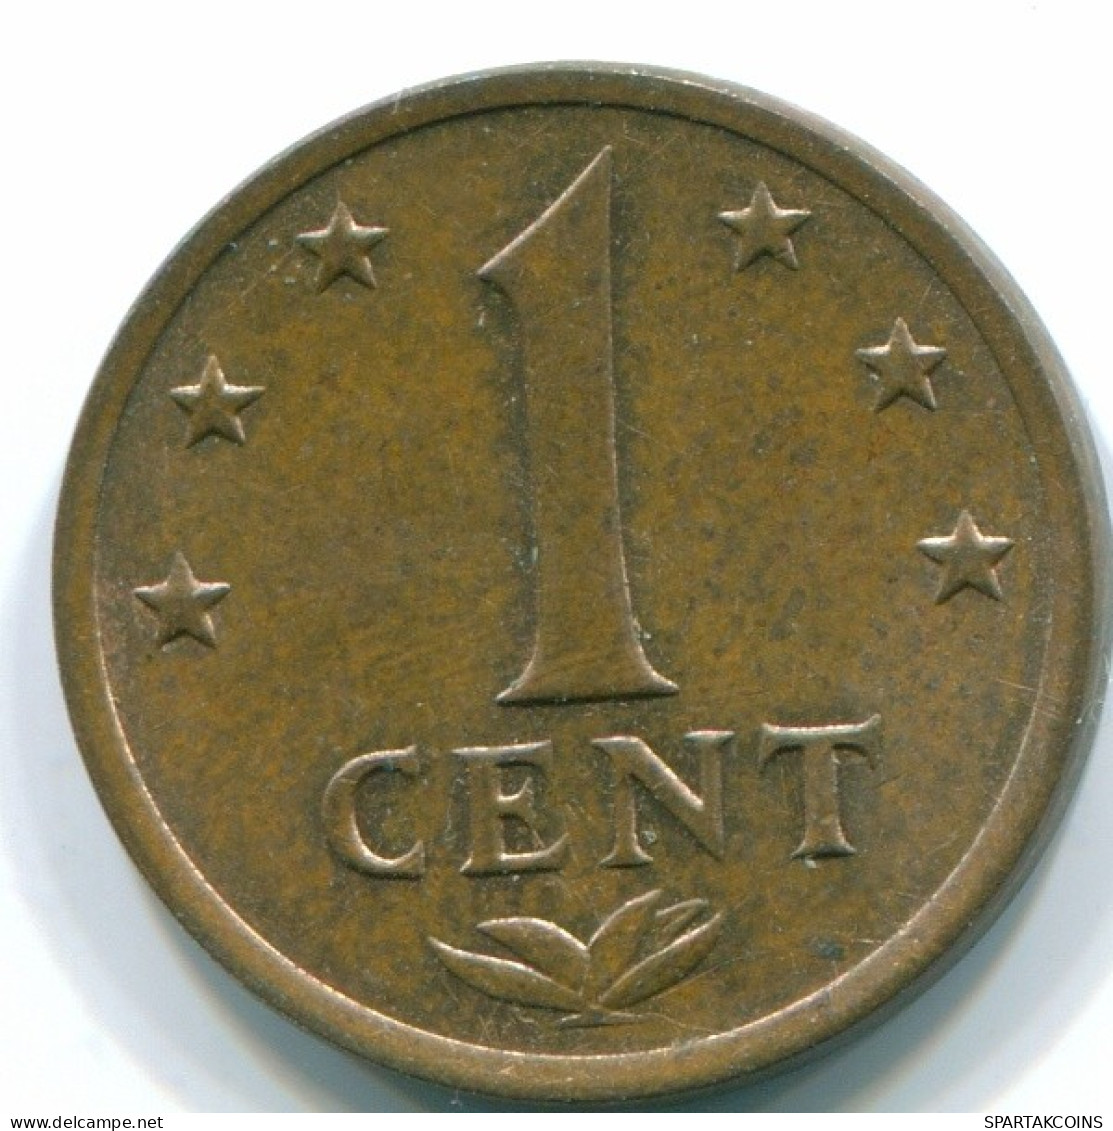 1 CENT 1971 NIEDERLÄNDISCHE ANTILLEN Bronze Koloniale Münze #S10620.D.A - Netherlands Antilles